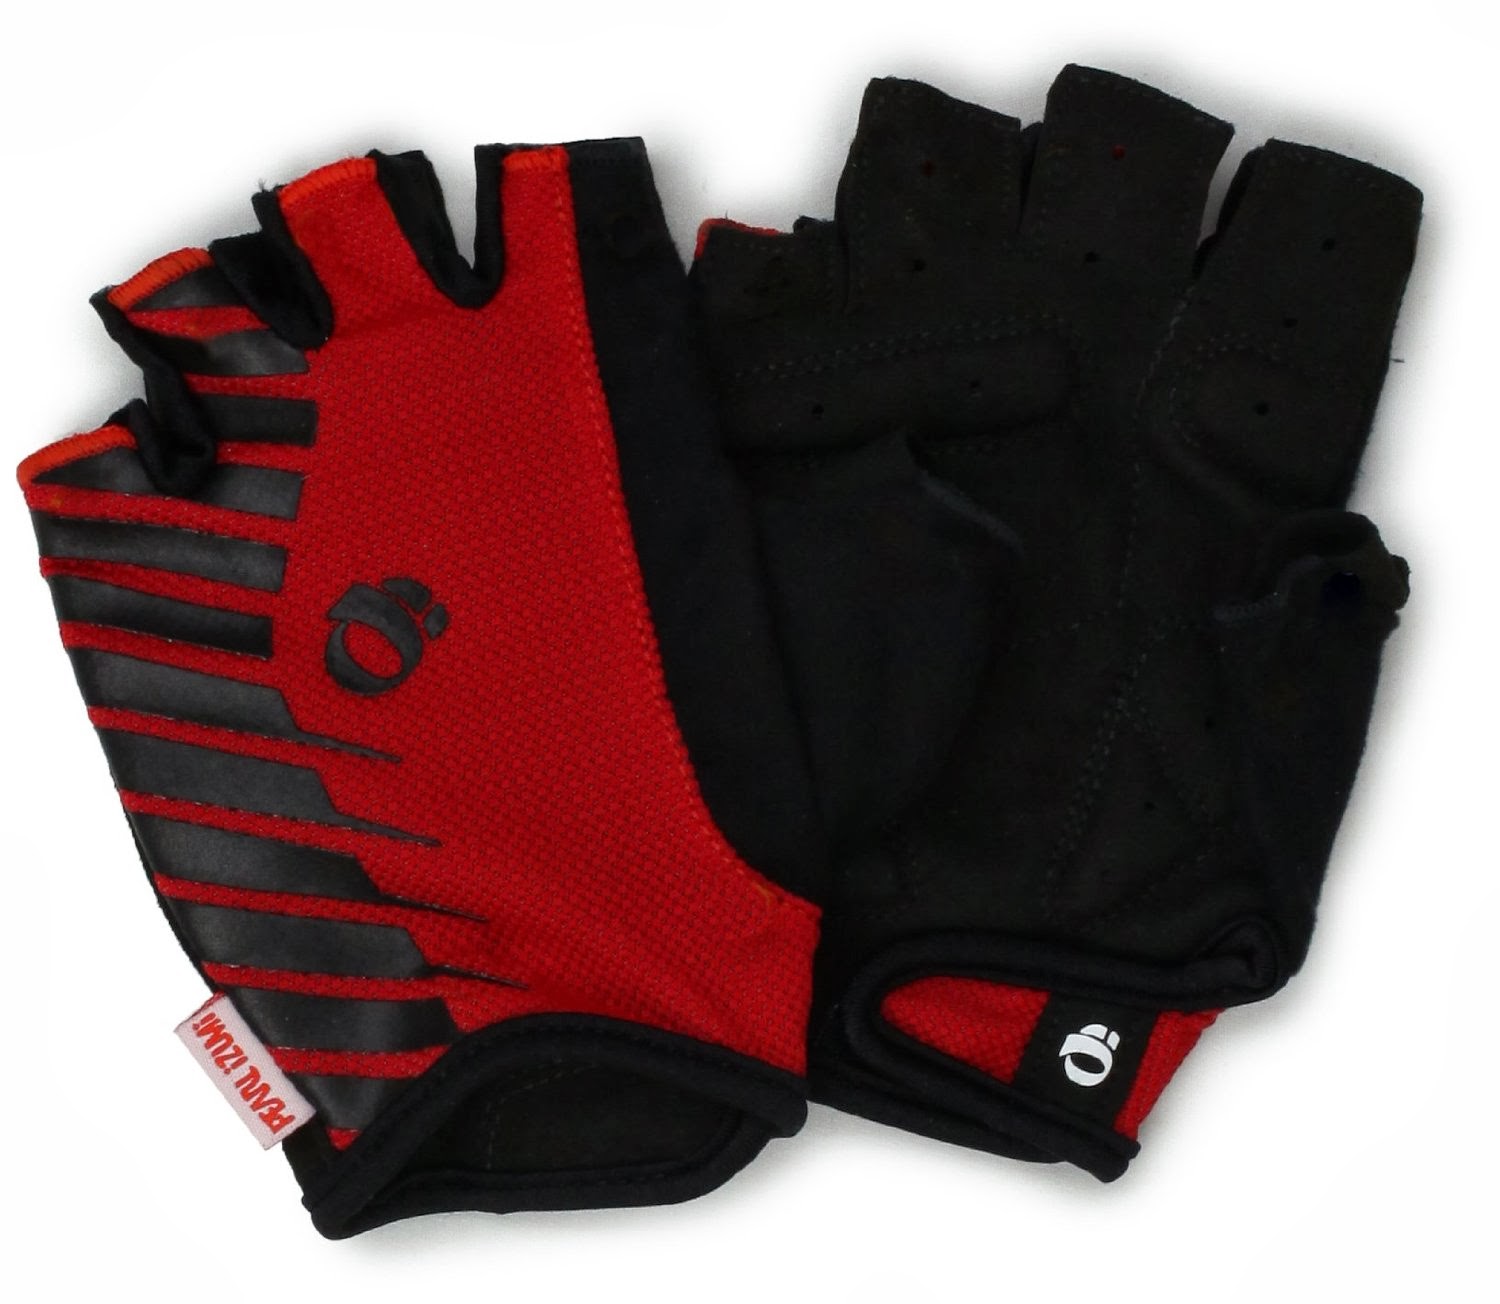 Men's Select Glove